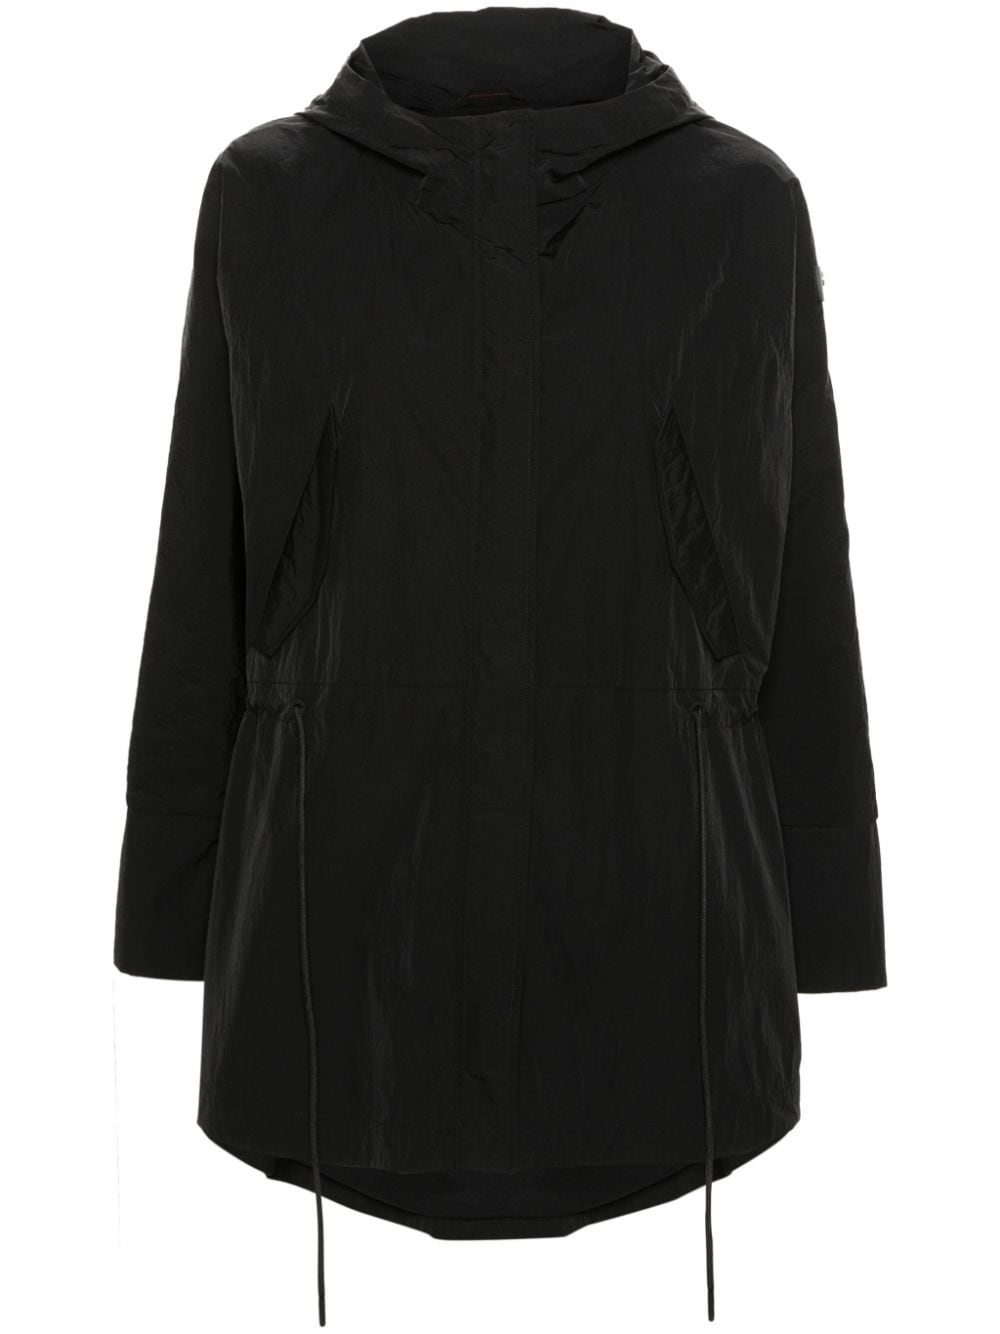 Peuterey fitted hooded jacket - Black von Peuterey